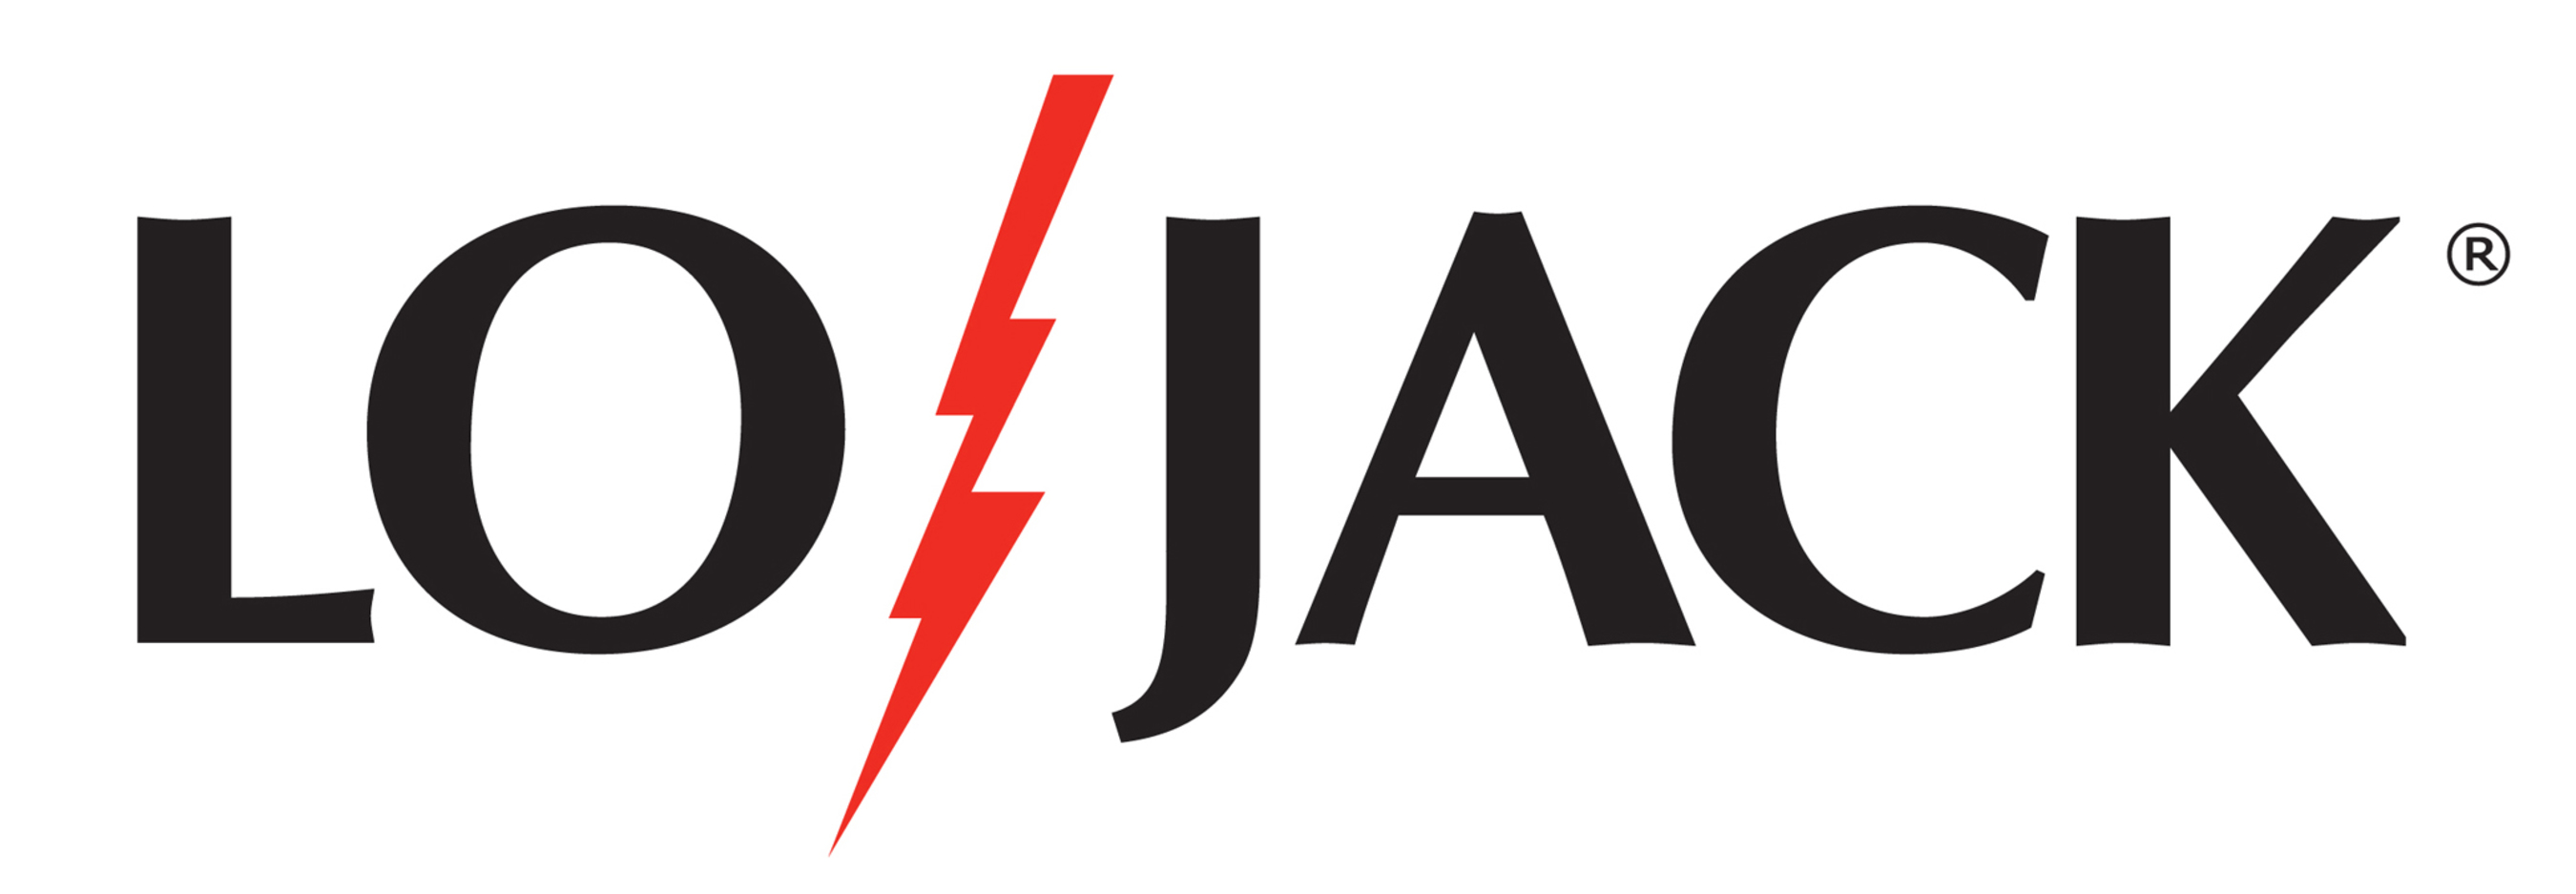 LoJack Corporation Logo. (PRNewsFoto/LoJack Corporation) (PRNewsFoto/)